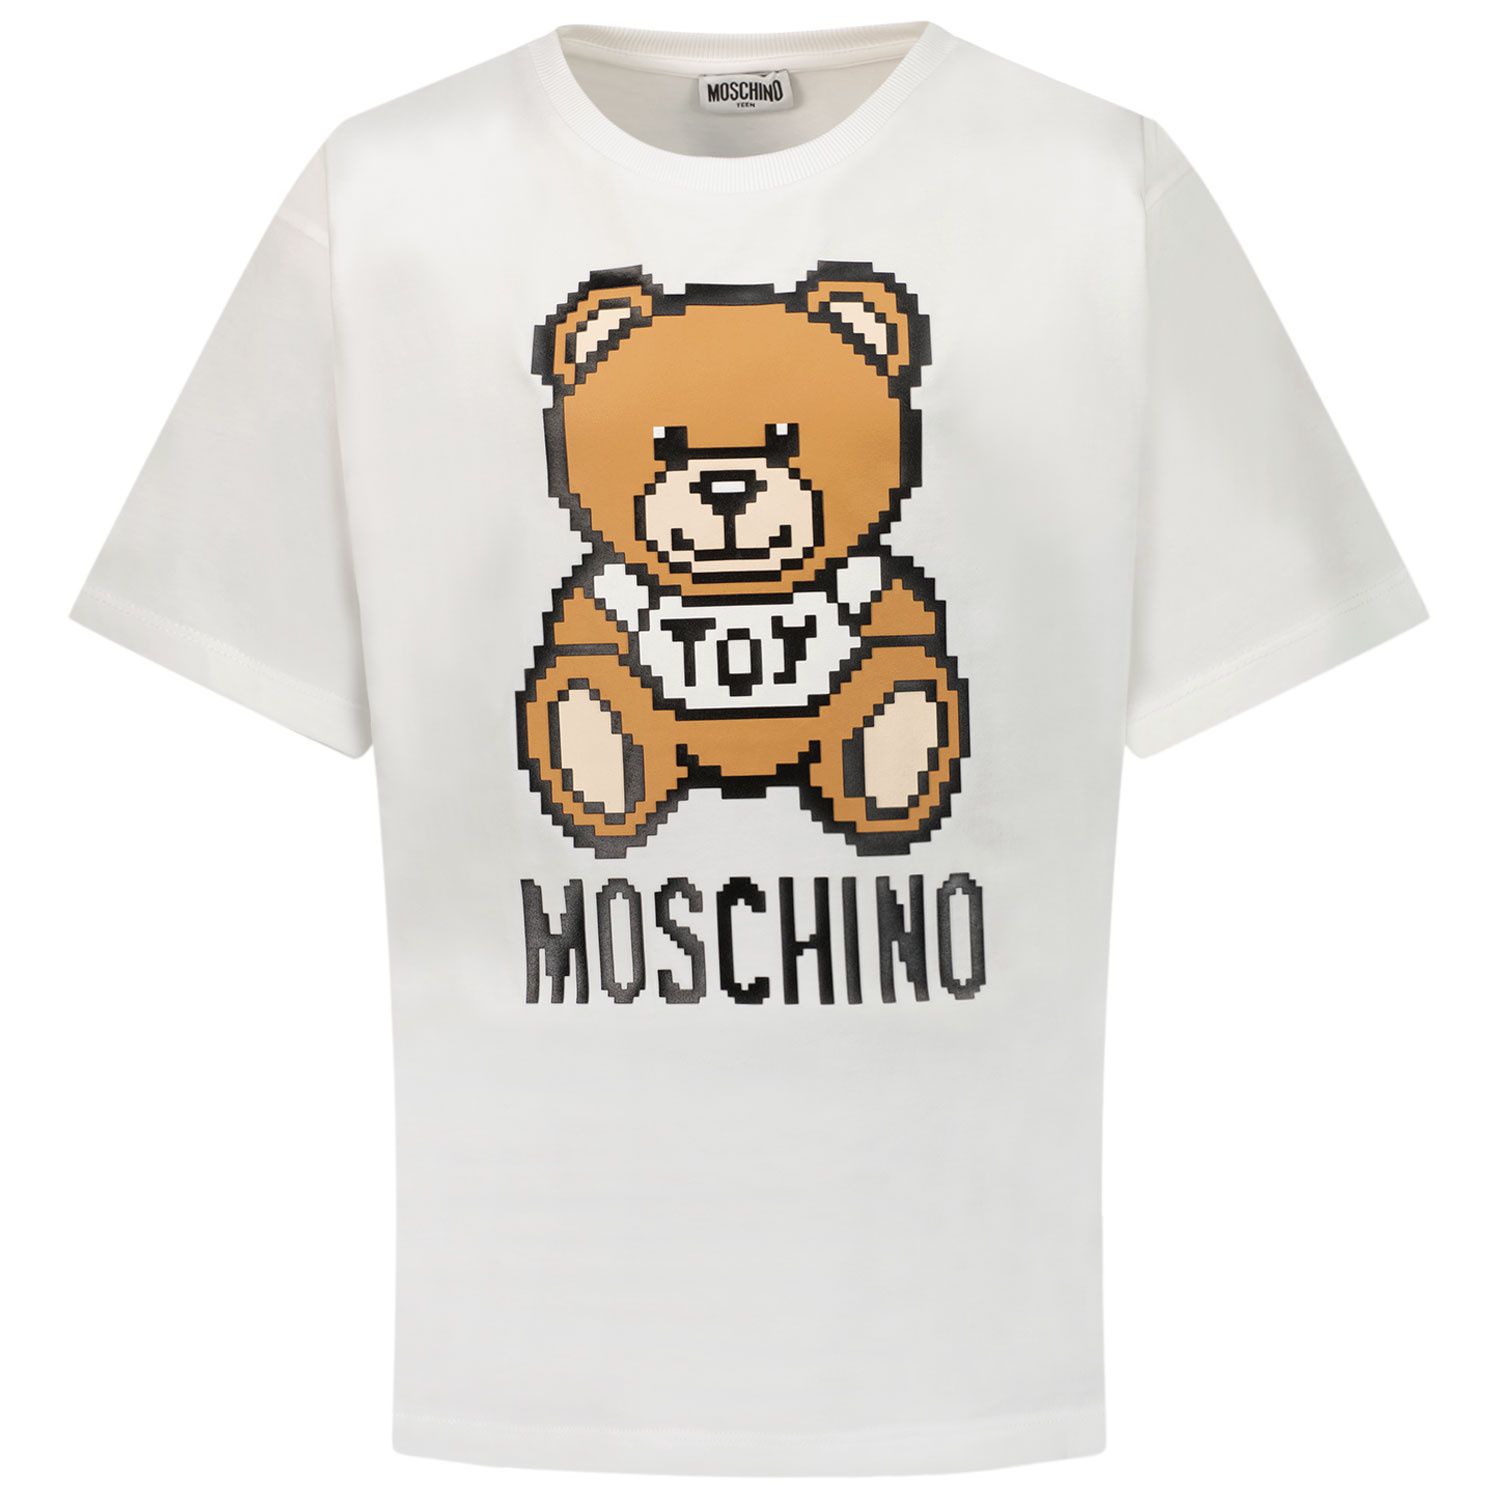 Picture of Moschino H9M02X kids t-shirt white